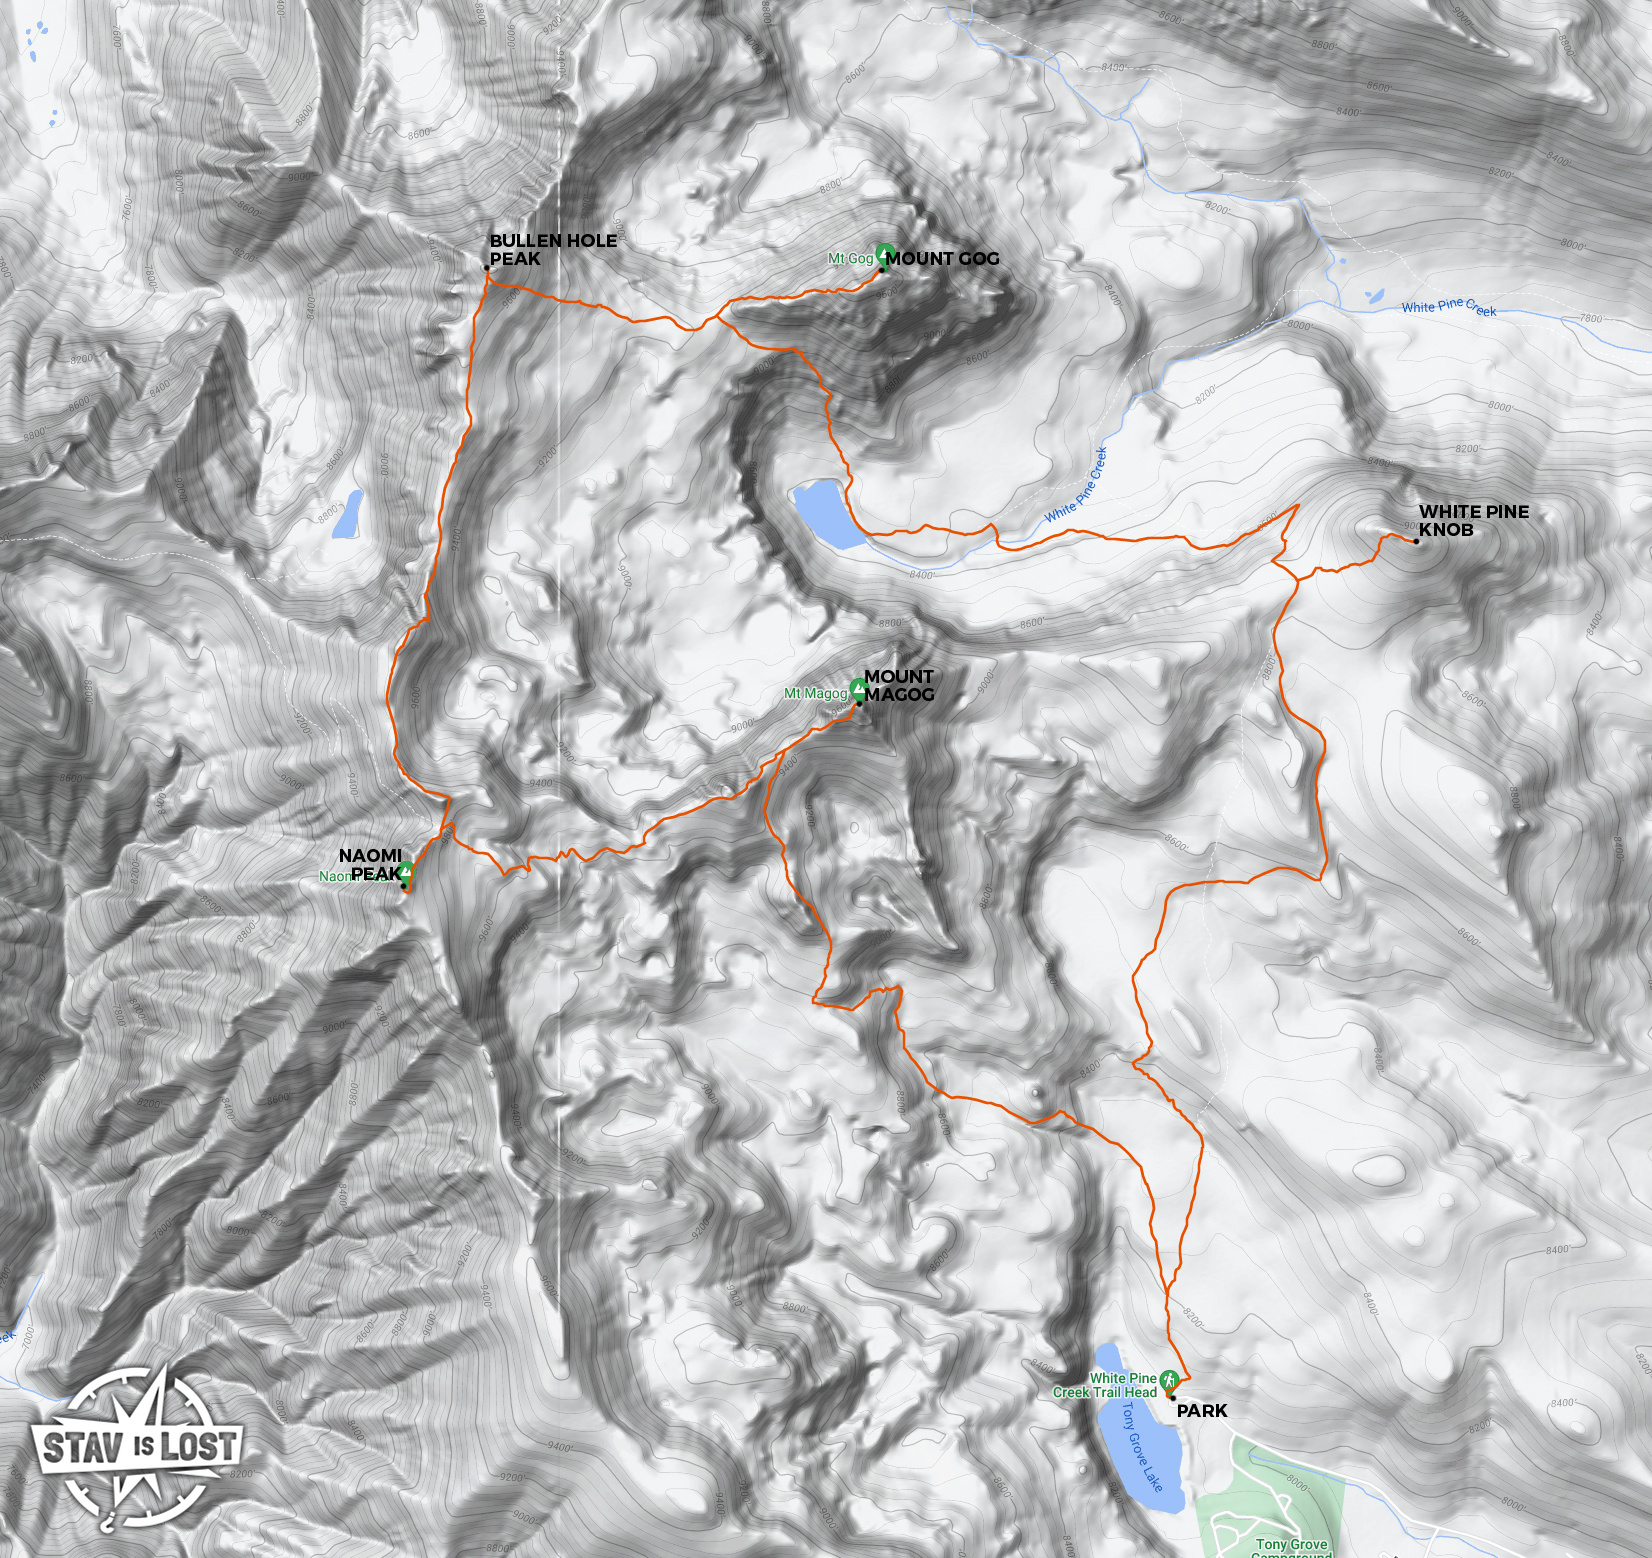 map for Mount Magog, Naomi Peak, Mount Gog, White Pine Lake by stav is lost